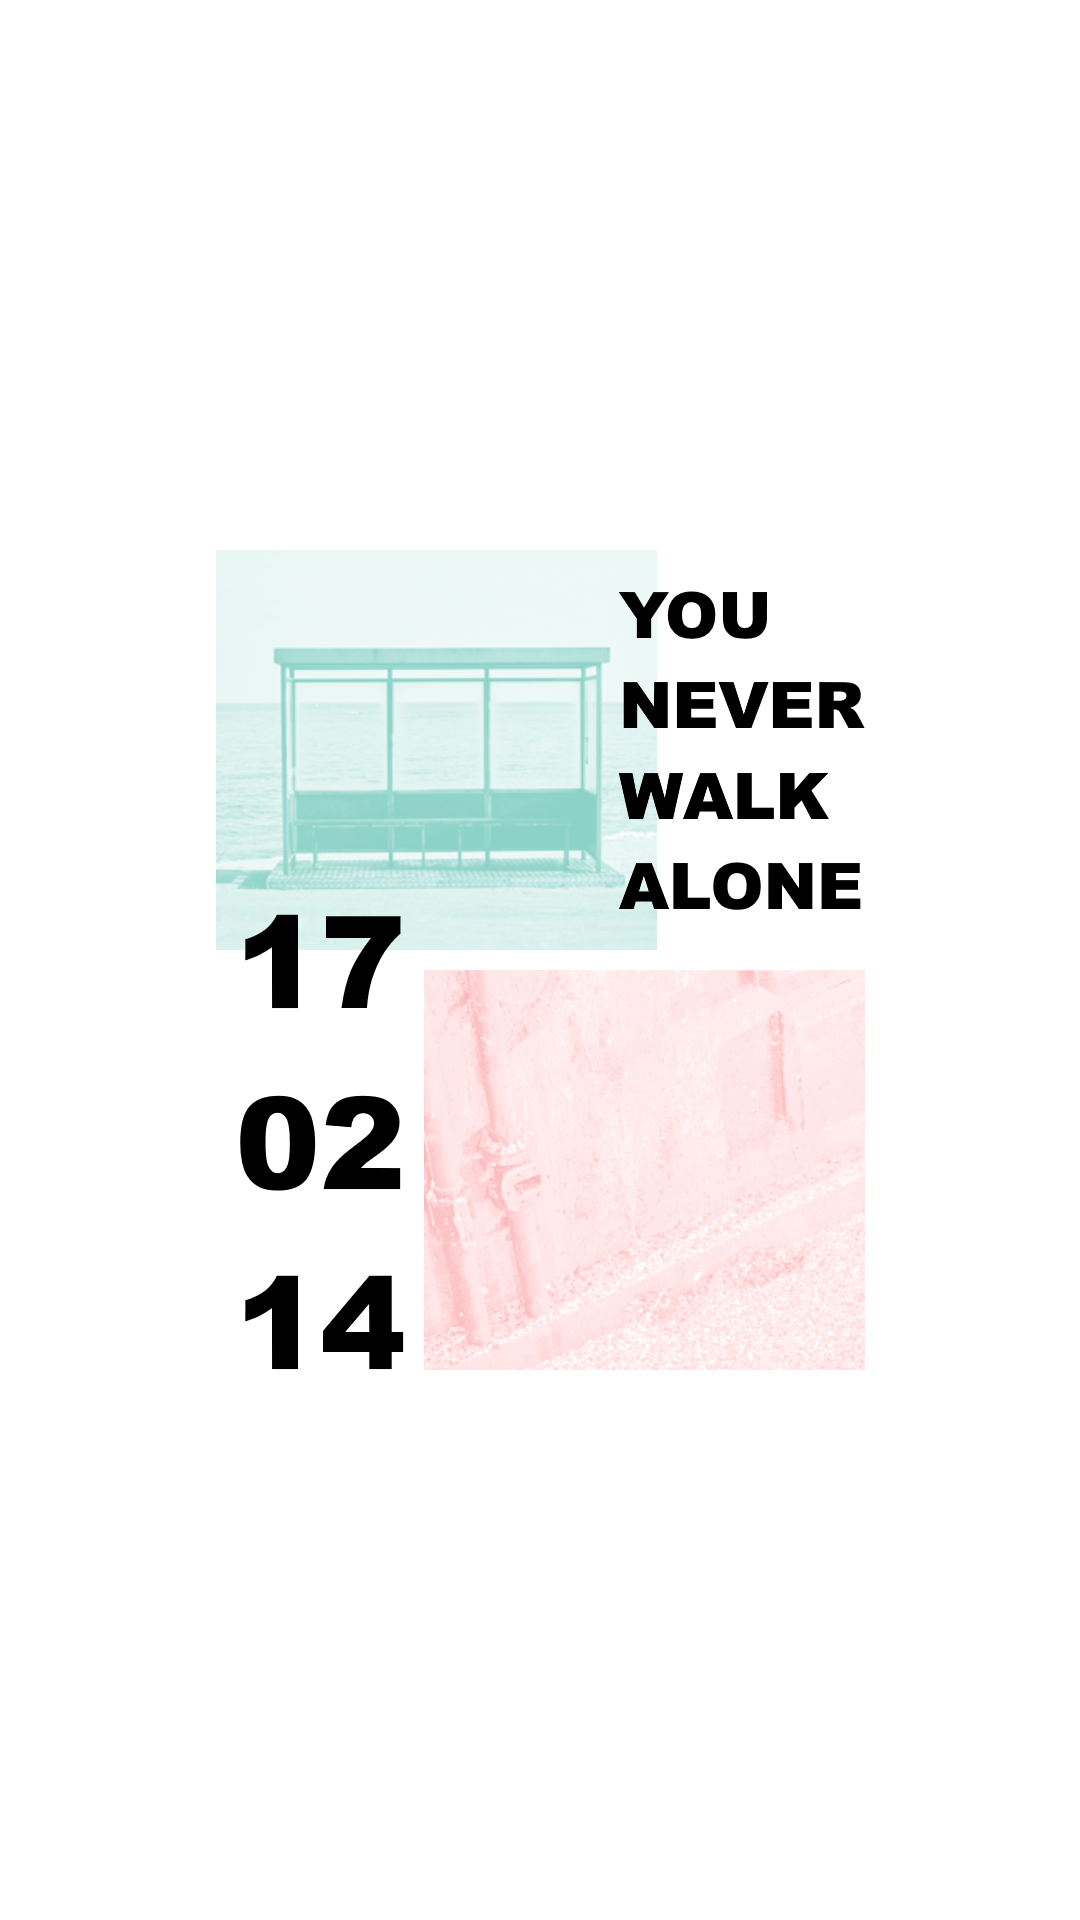 Bts you never walk alone lockscreens, Tumblr